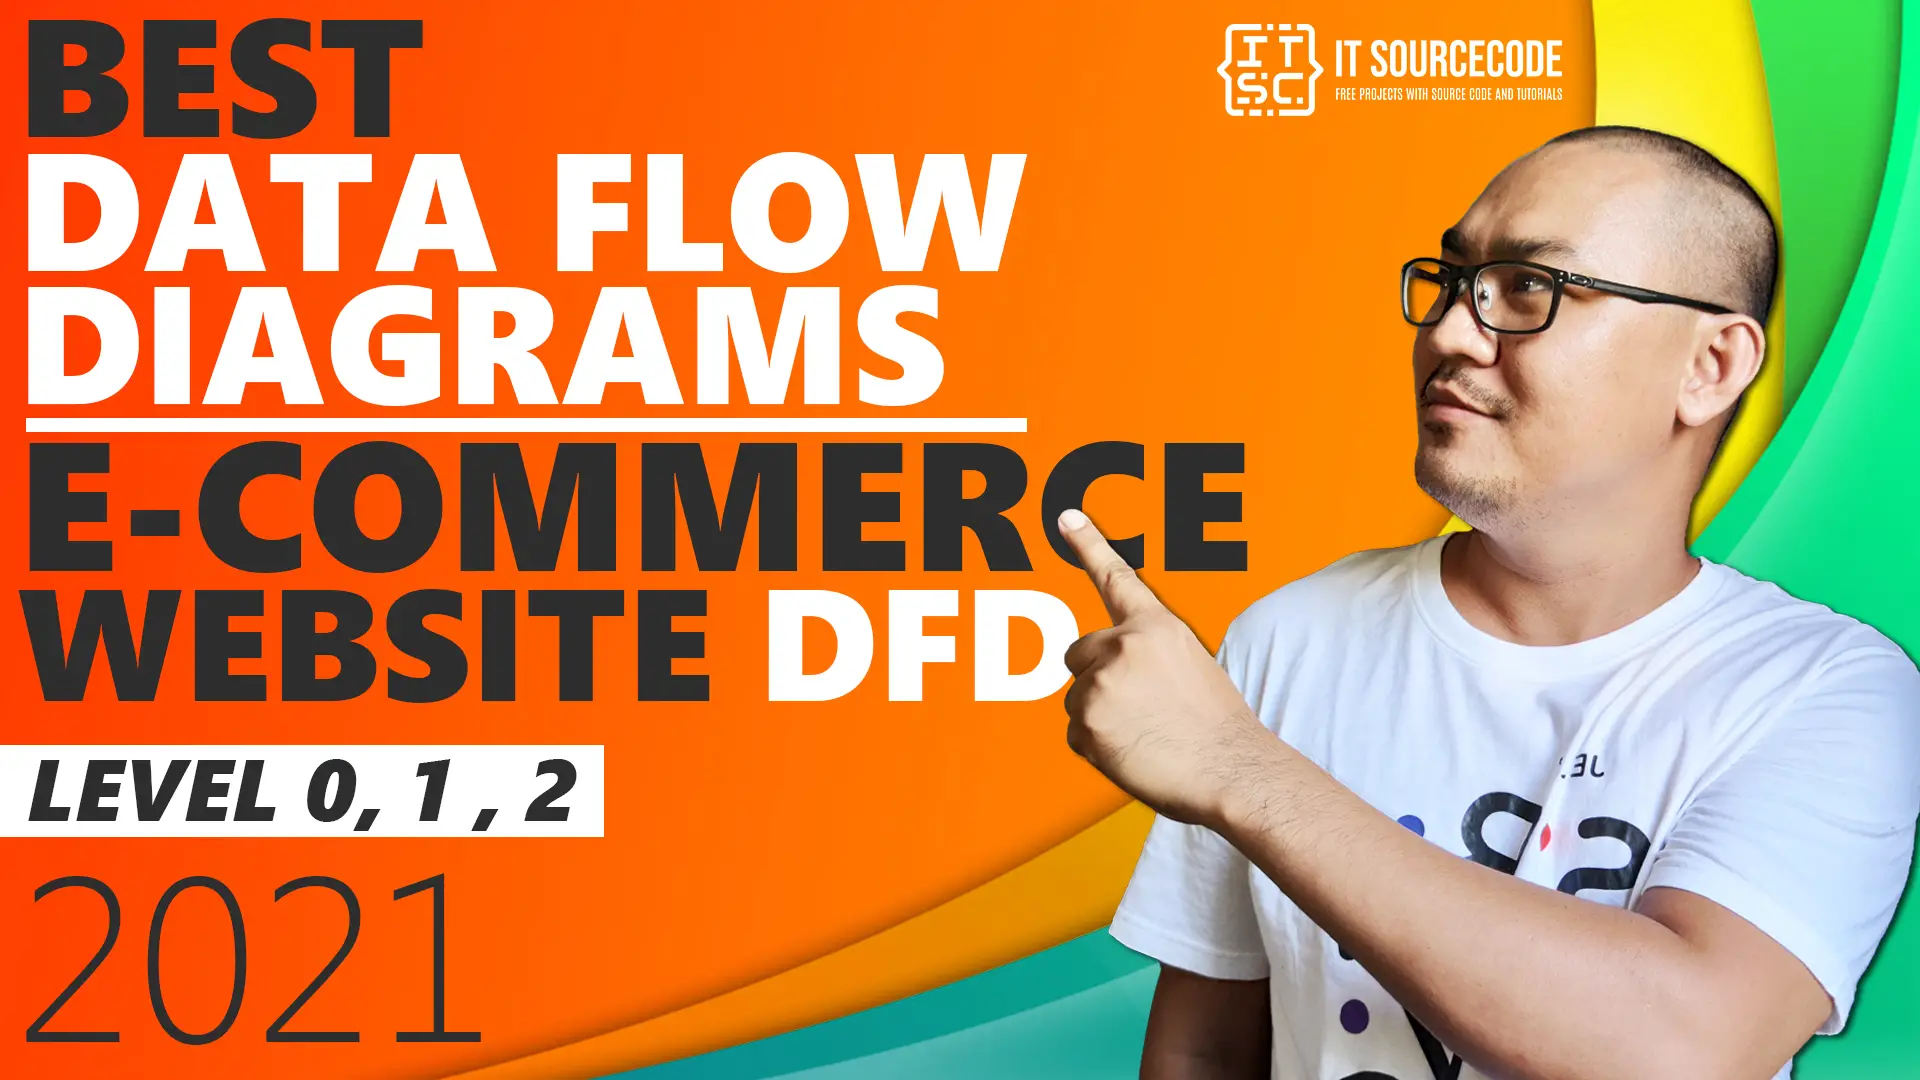 Best Data Flow Diagram - E-Commerce Website DFD Level 0 1 2 - 2021